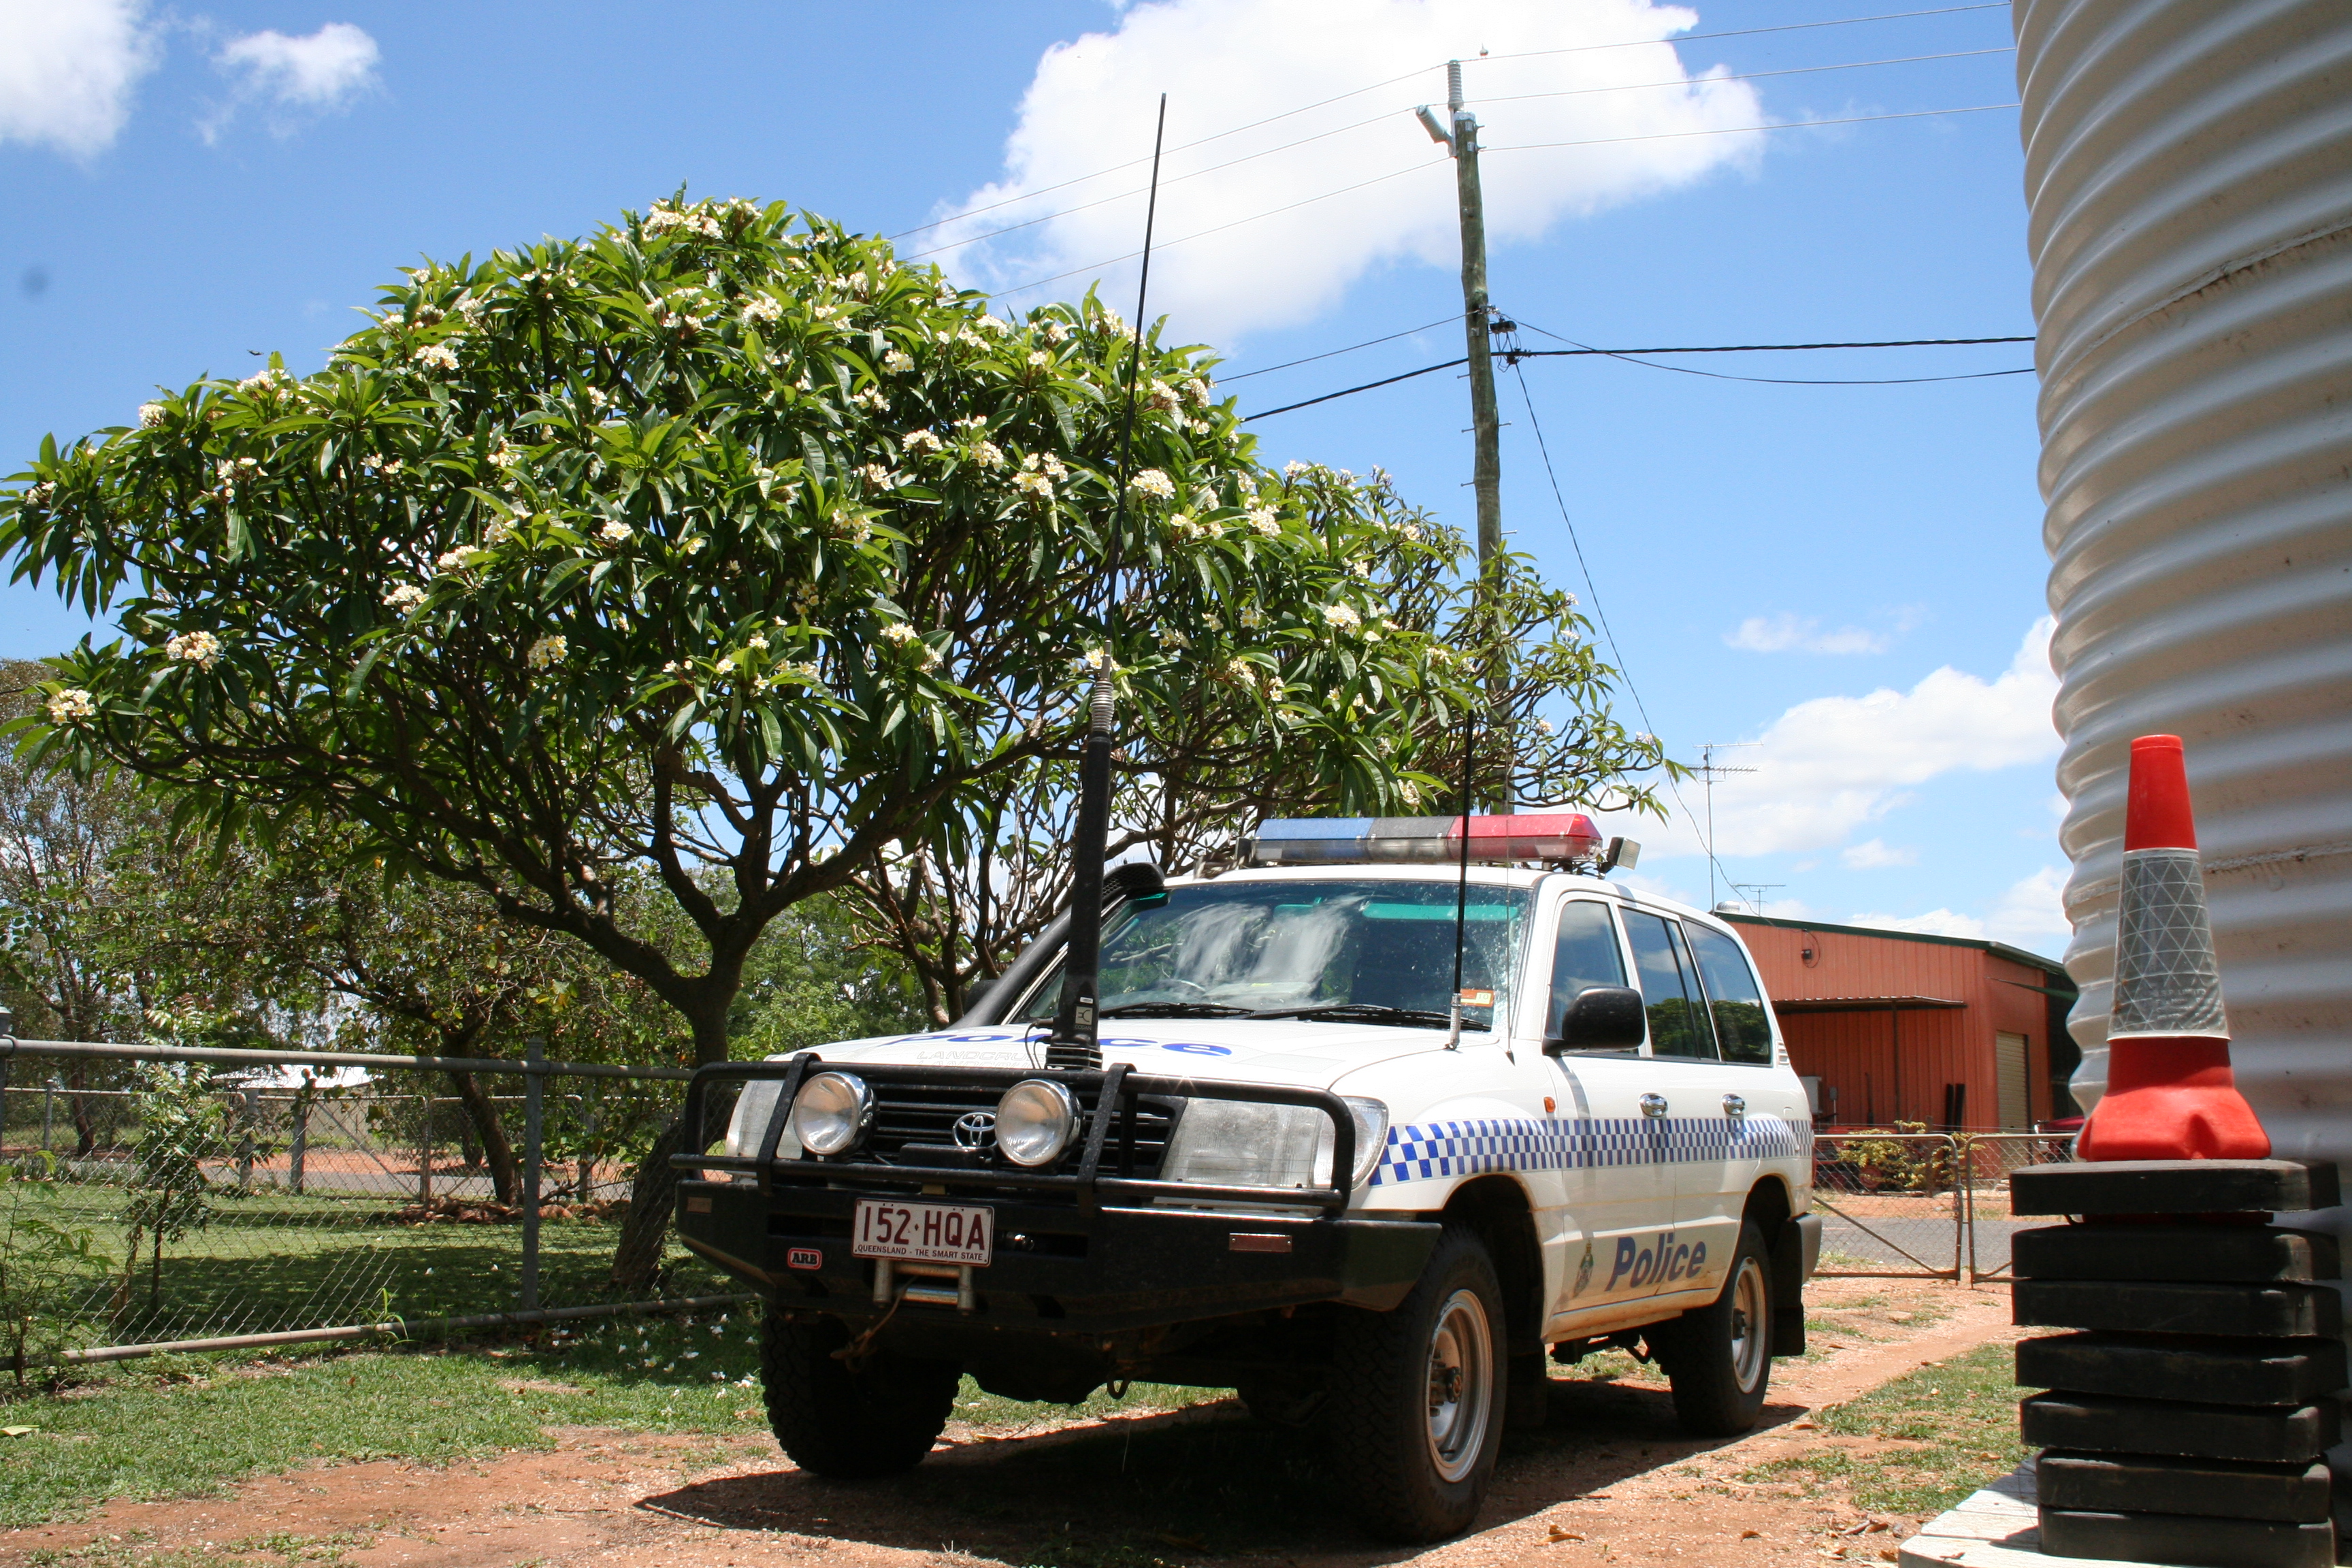 Queensland Police (Australia)